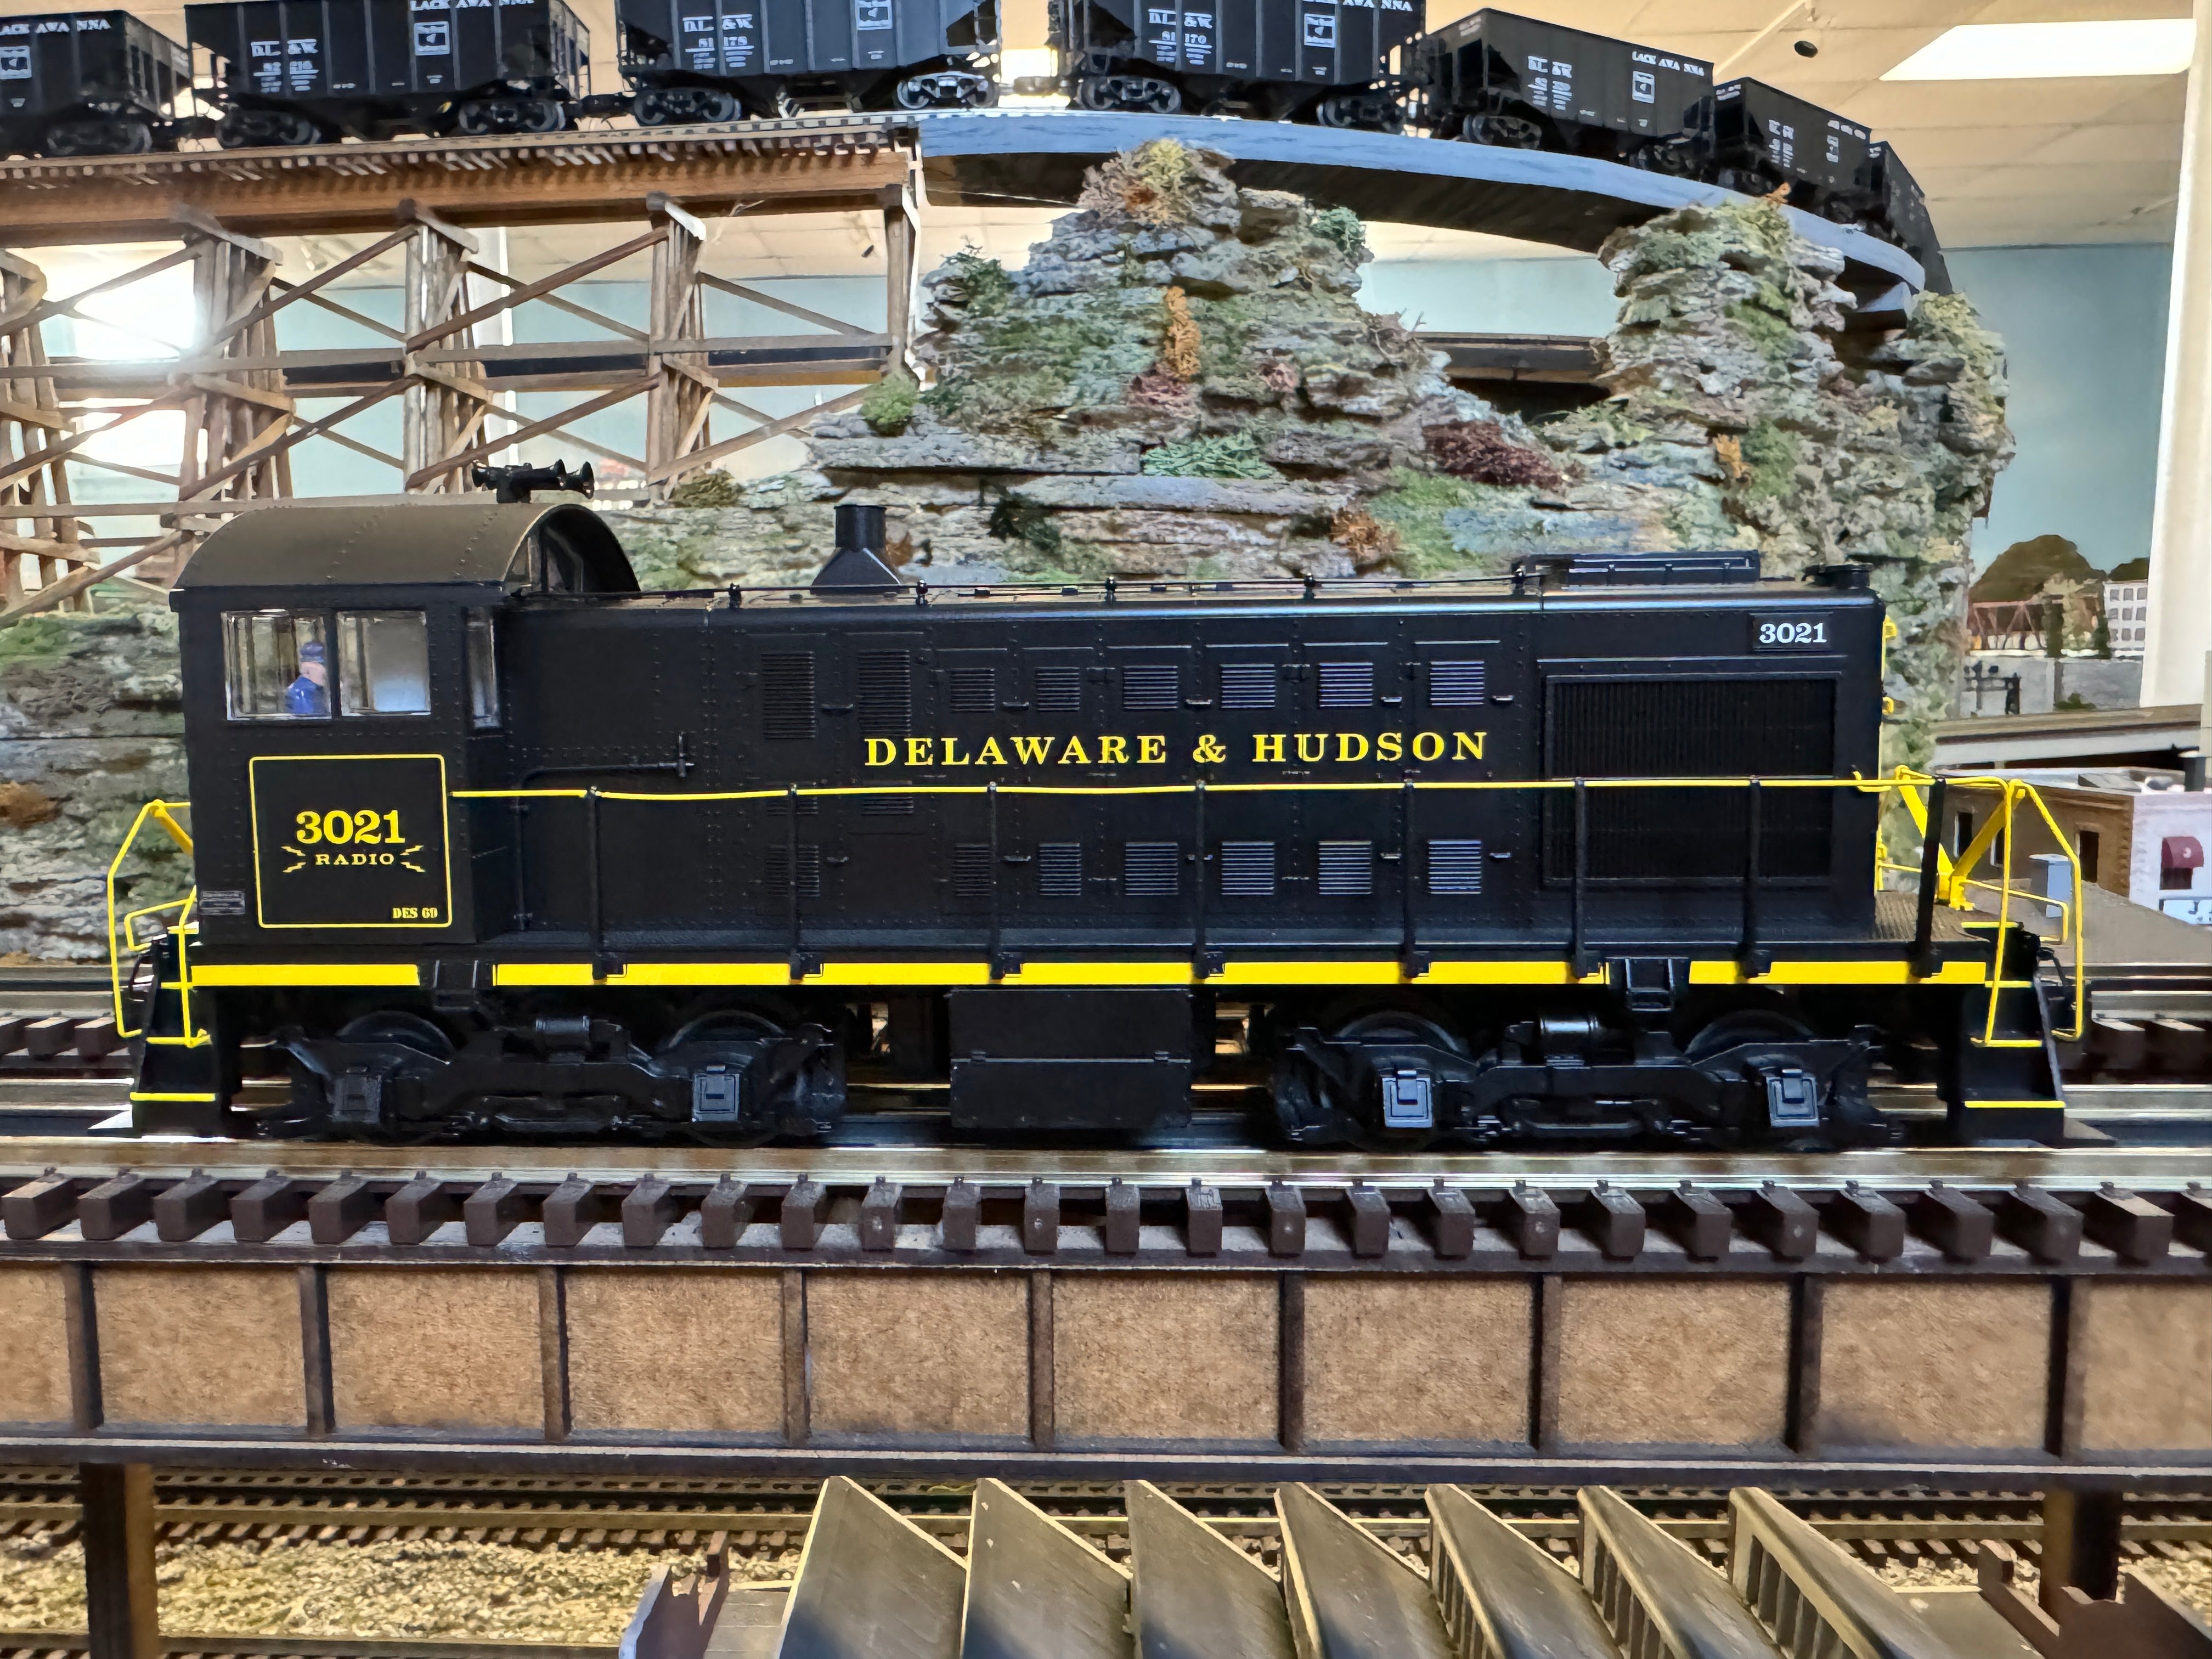 Lionel 2433910 - Legacy ALCo S2 Diesel Locomotive "Delaware & Hudson" #3021 - Custom Run for MrMuffin'sTrains